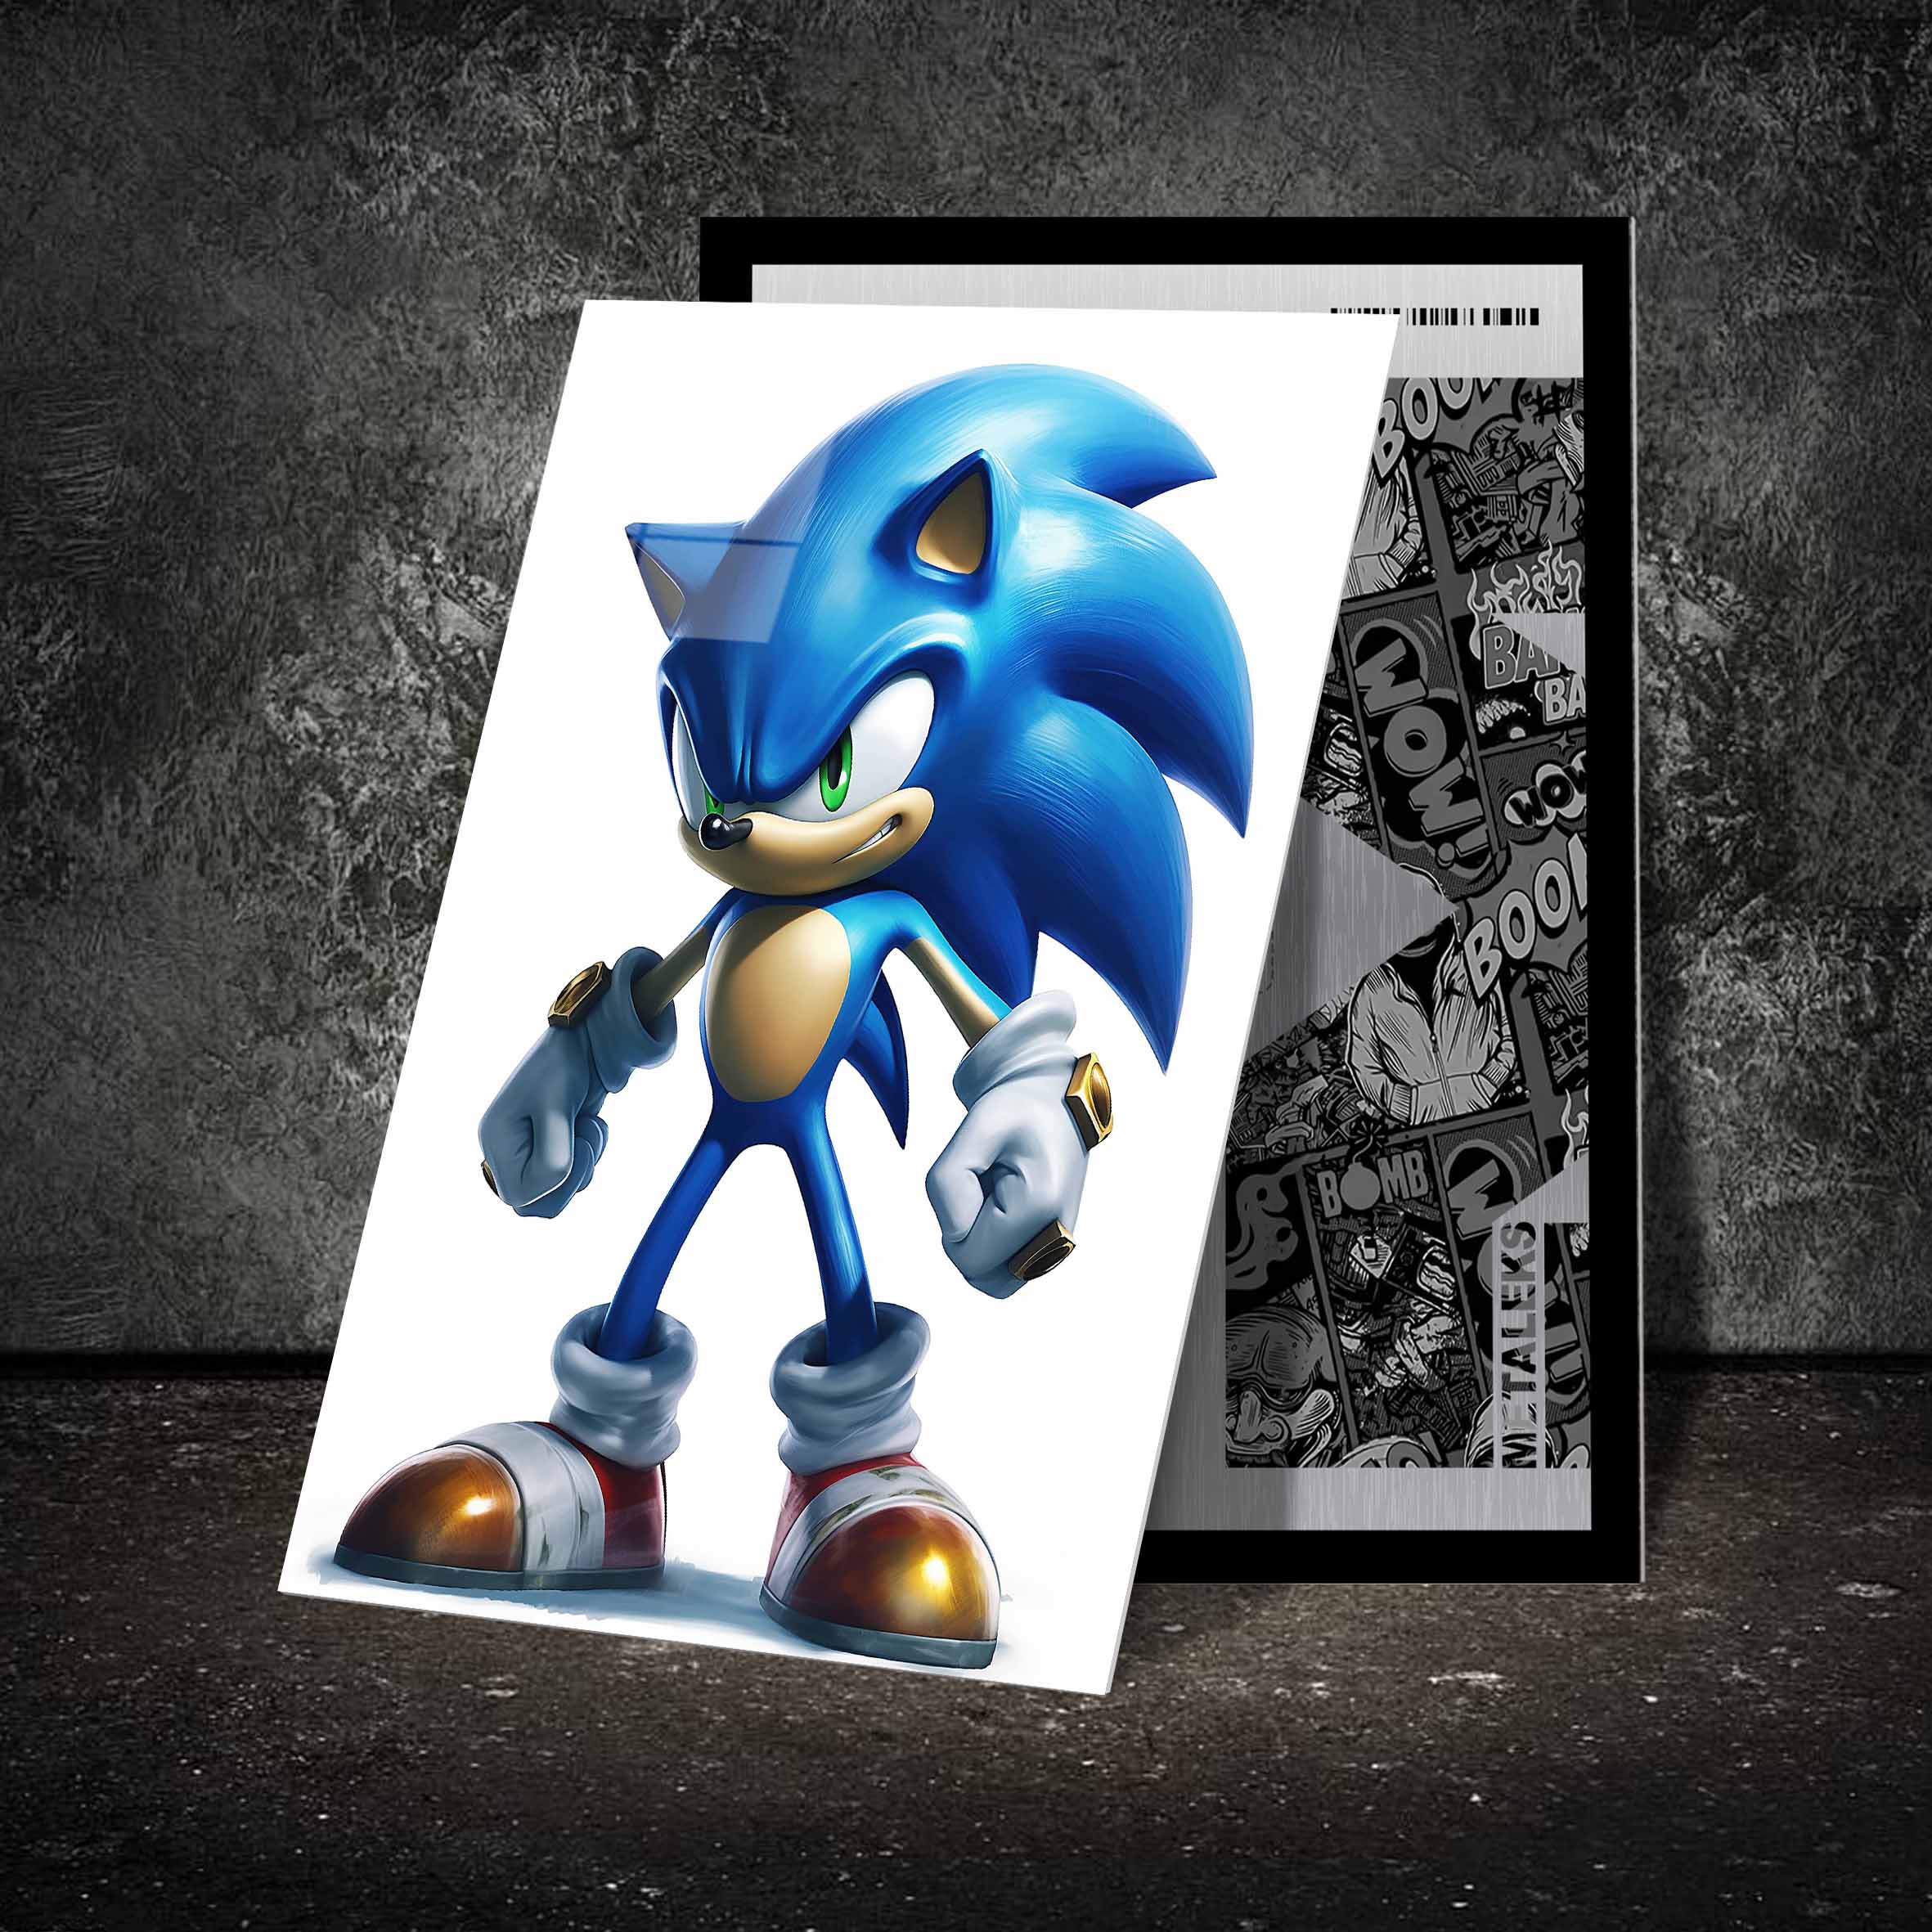 Sonic The Hedgehog 2-designed by @SAMCRO